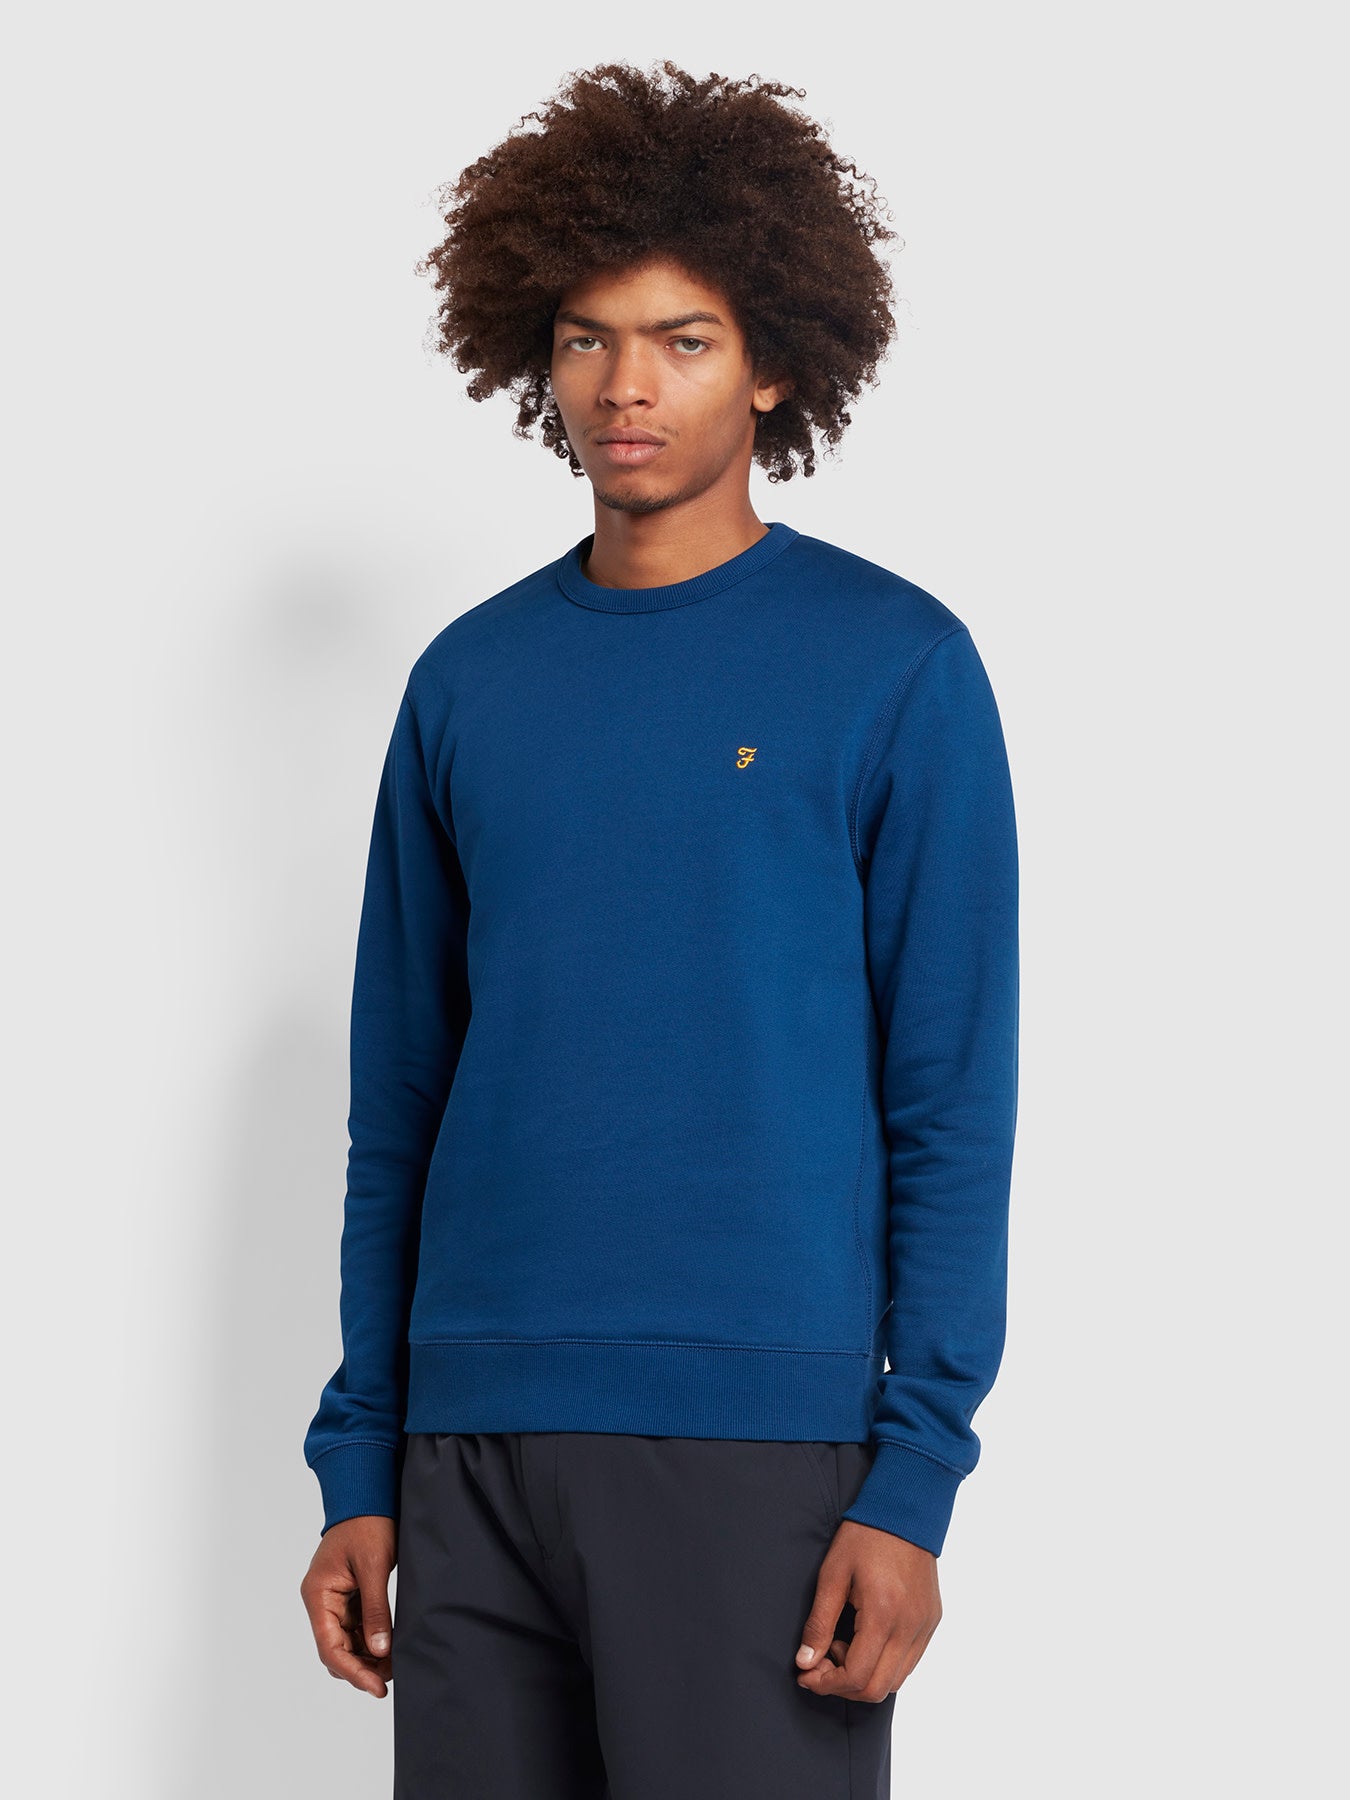 Farah Tim Slim Fit Organic Cotton Crew Neck Sweatshirt In Blue